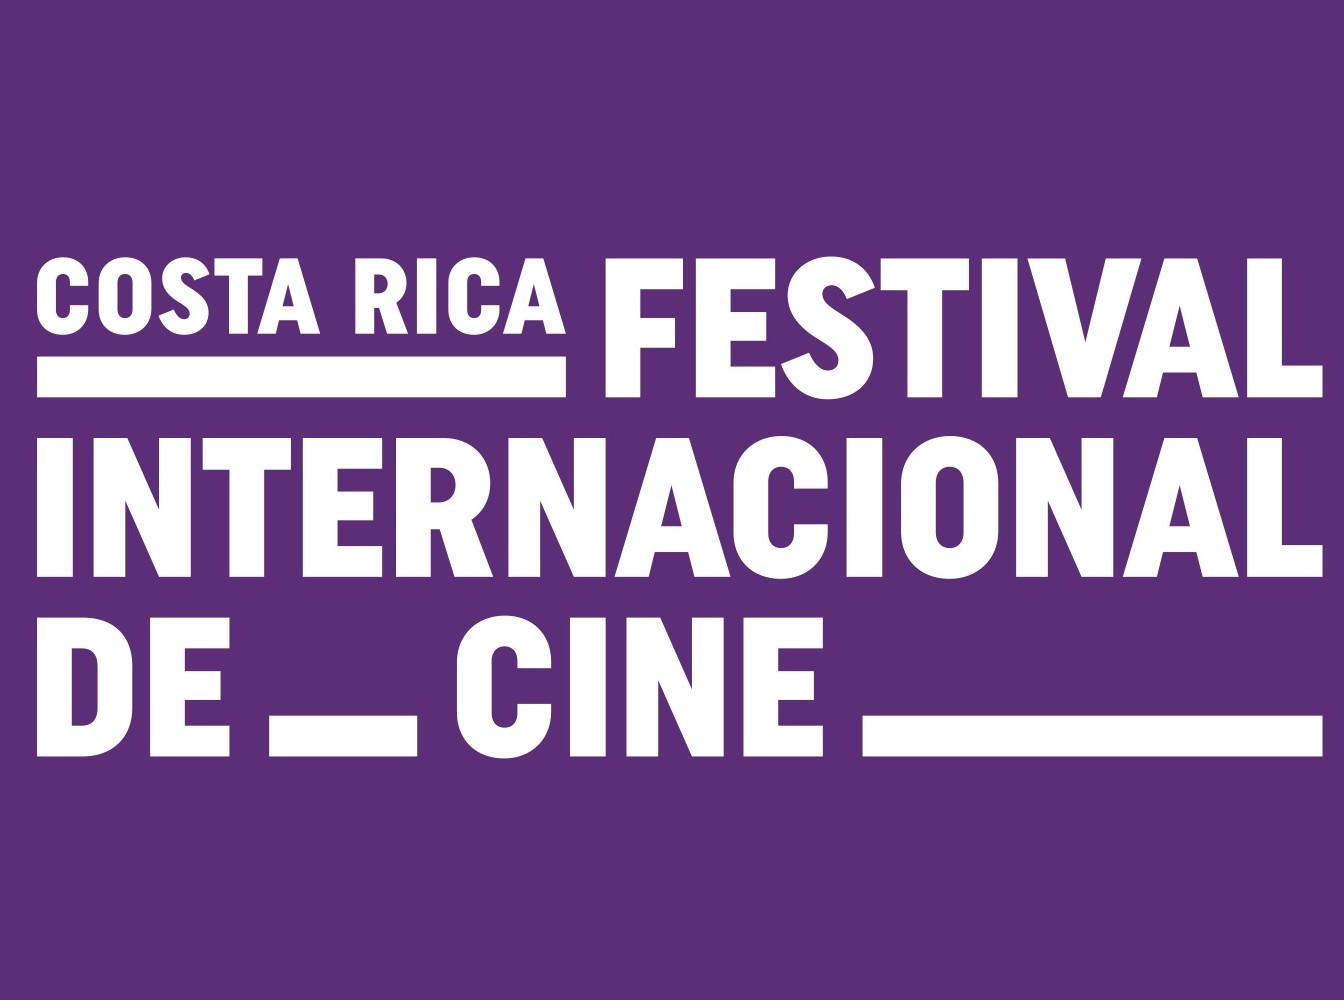 Costa Rica Festival Internacional de Cine anuncia taller de animación para su décima edición